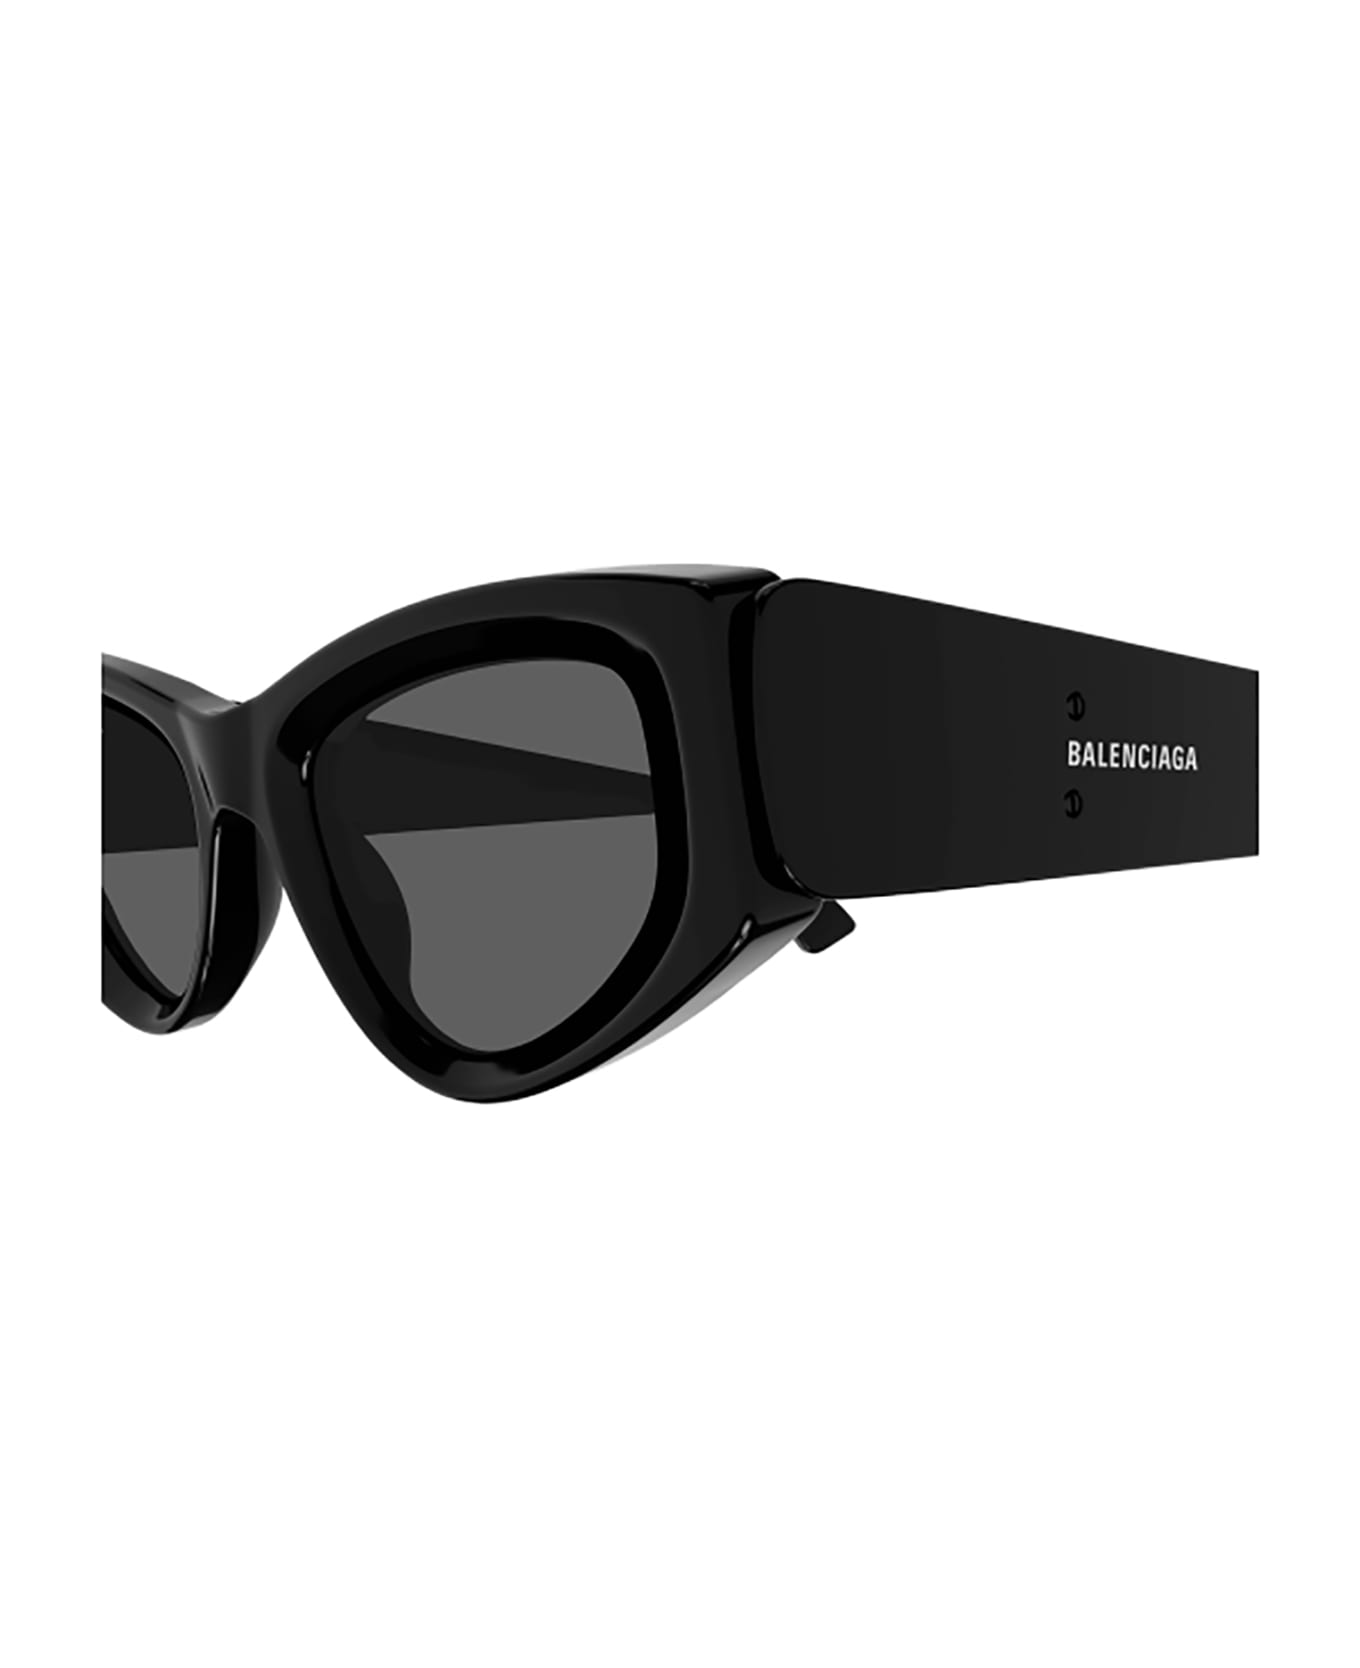 Balenciaga Eyewear 1e014i60a - Sunglasses with Web stripe